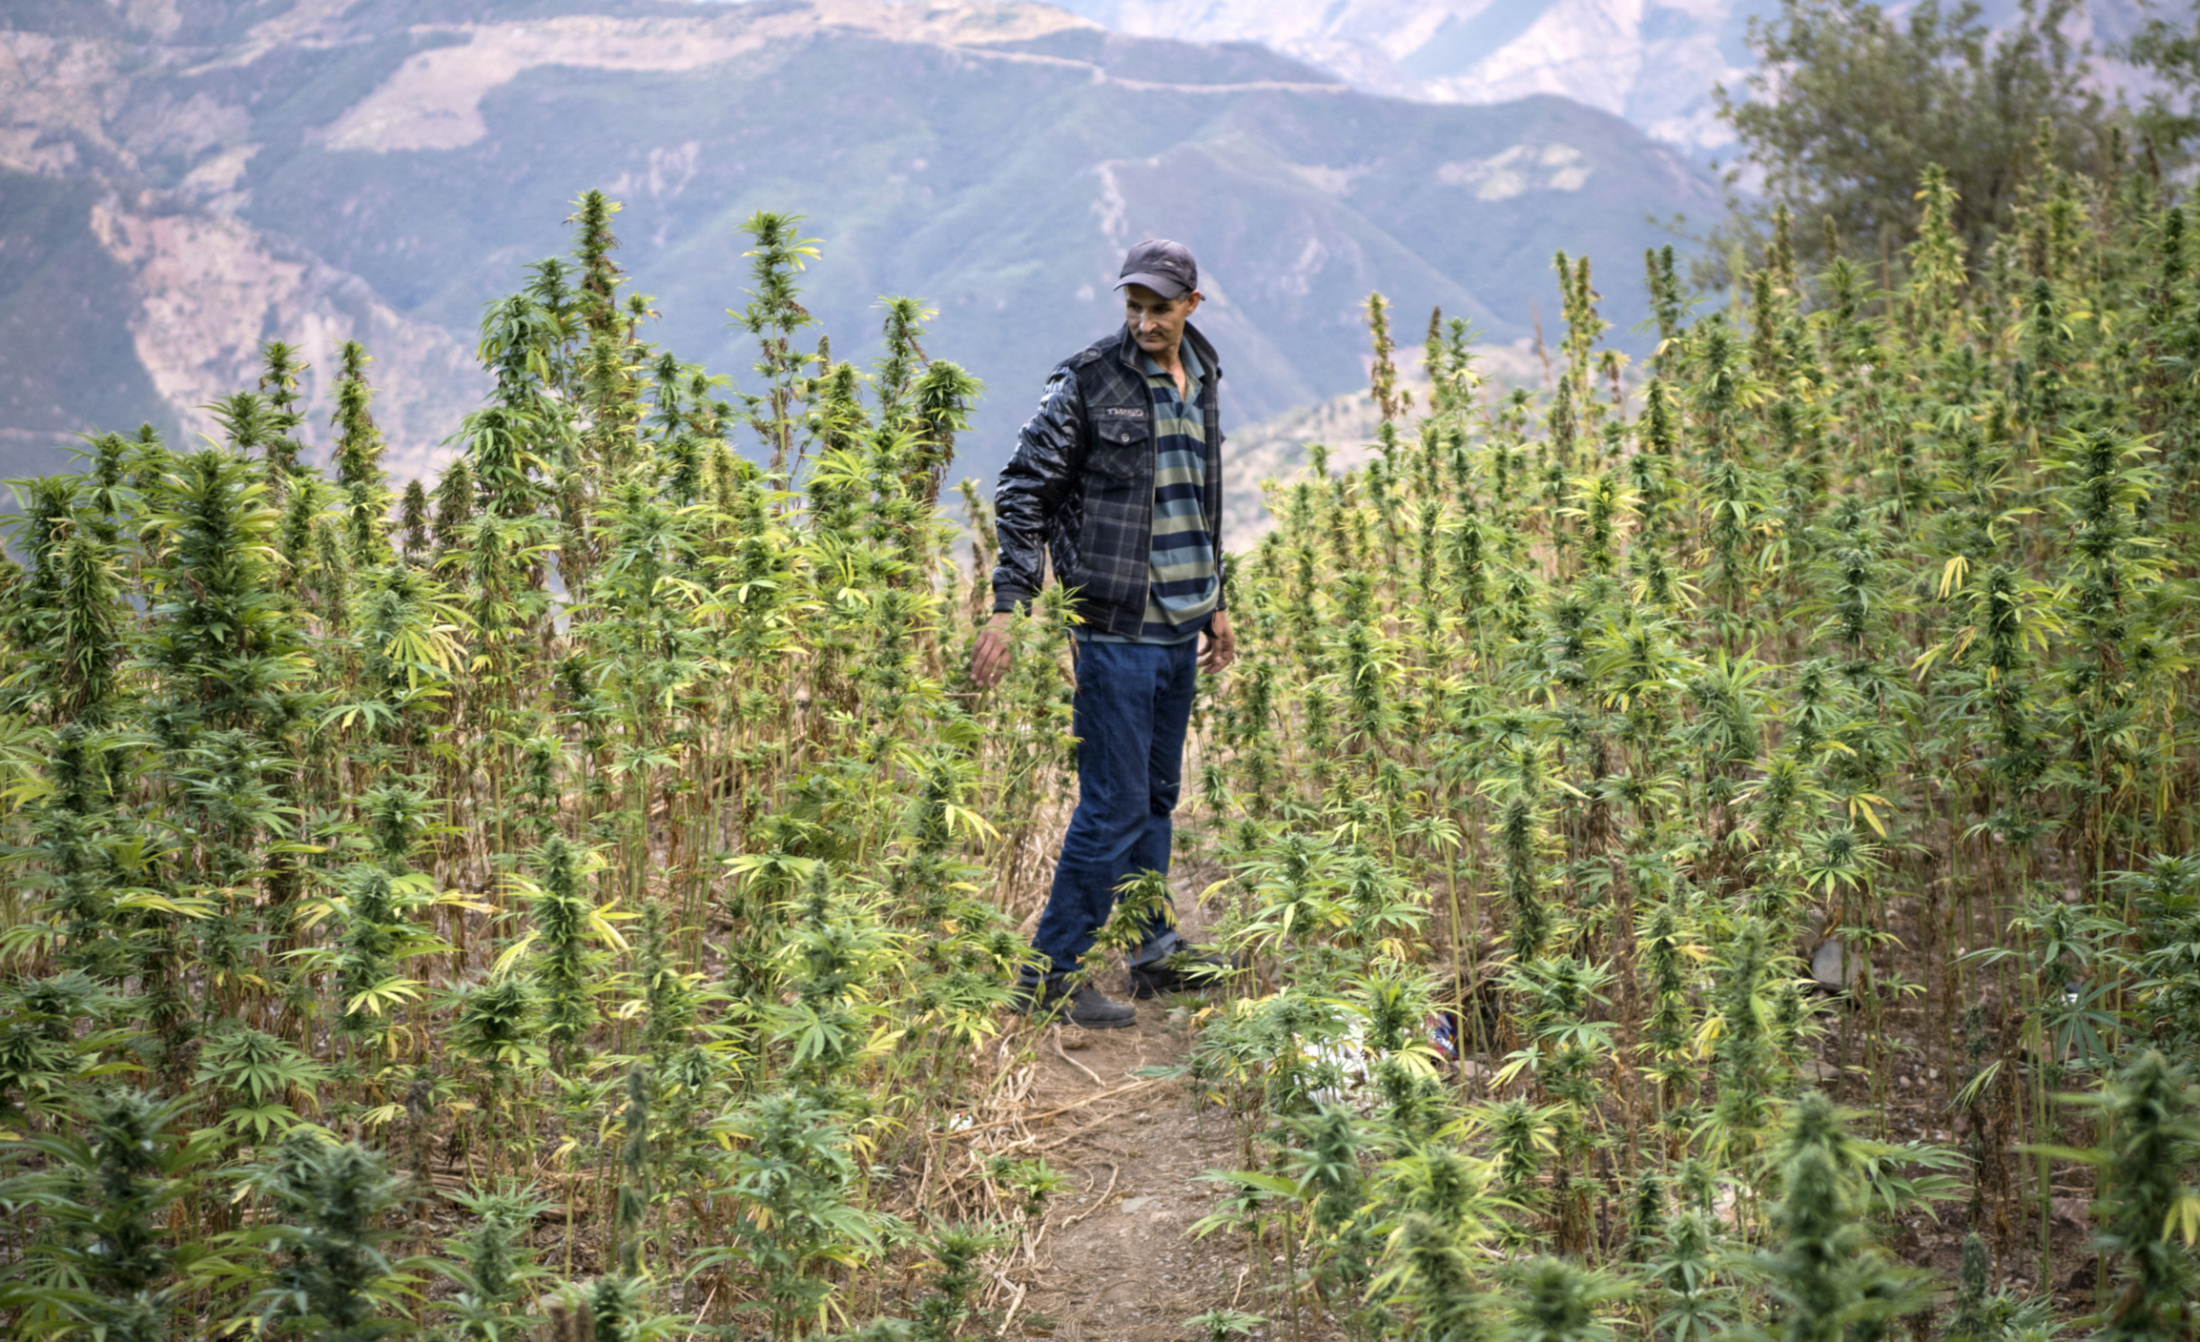 Morocco cannabis